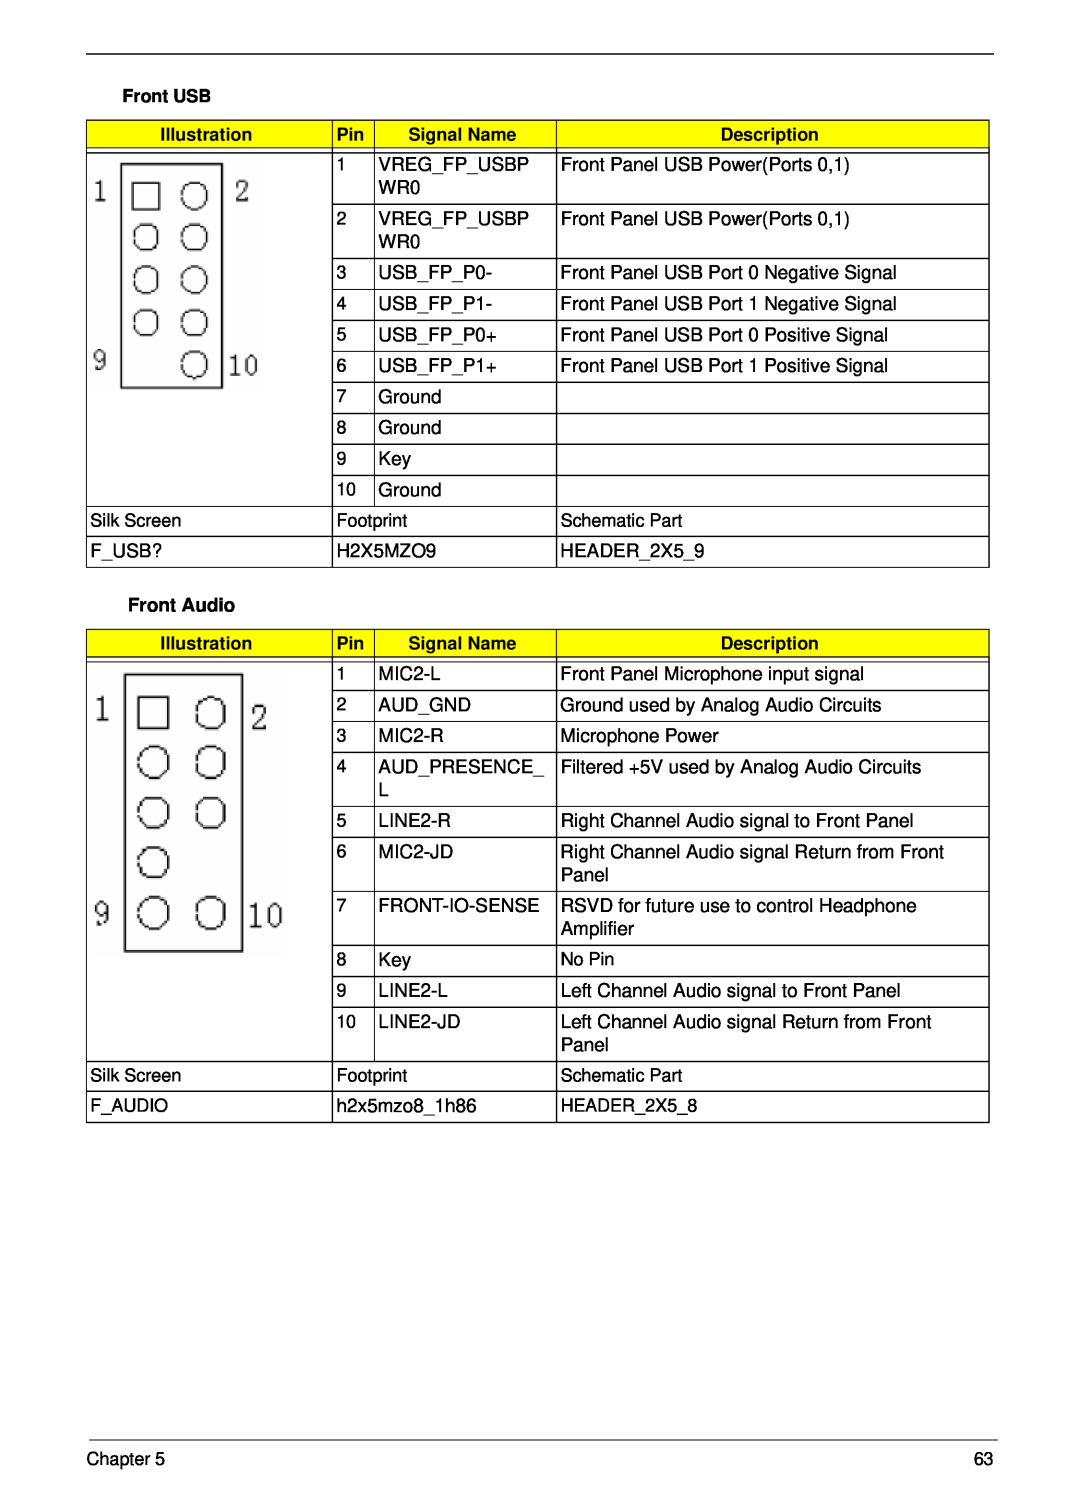 Aspire Digital M261, M1610 manual Front Audio 